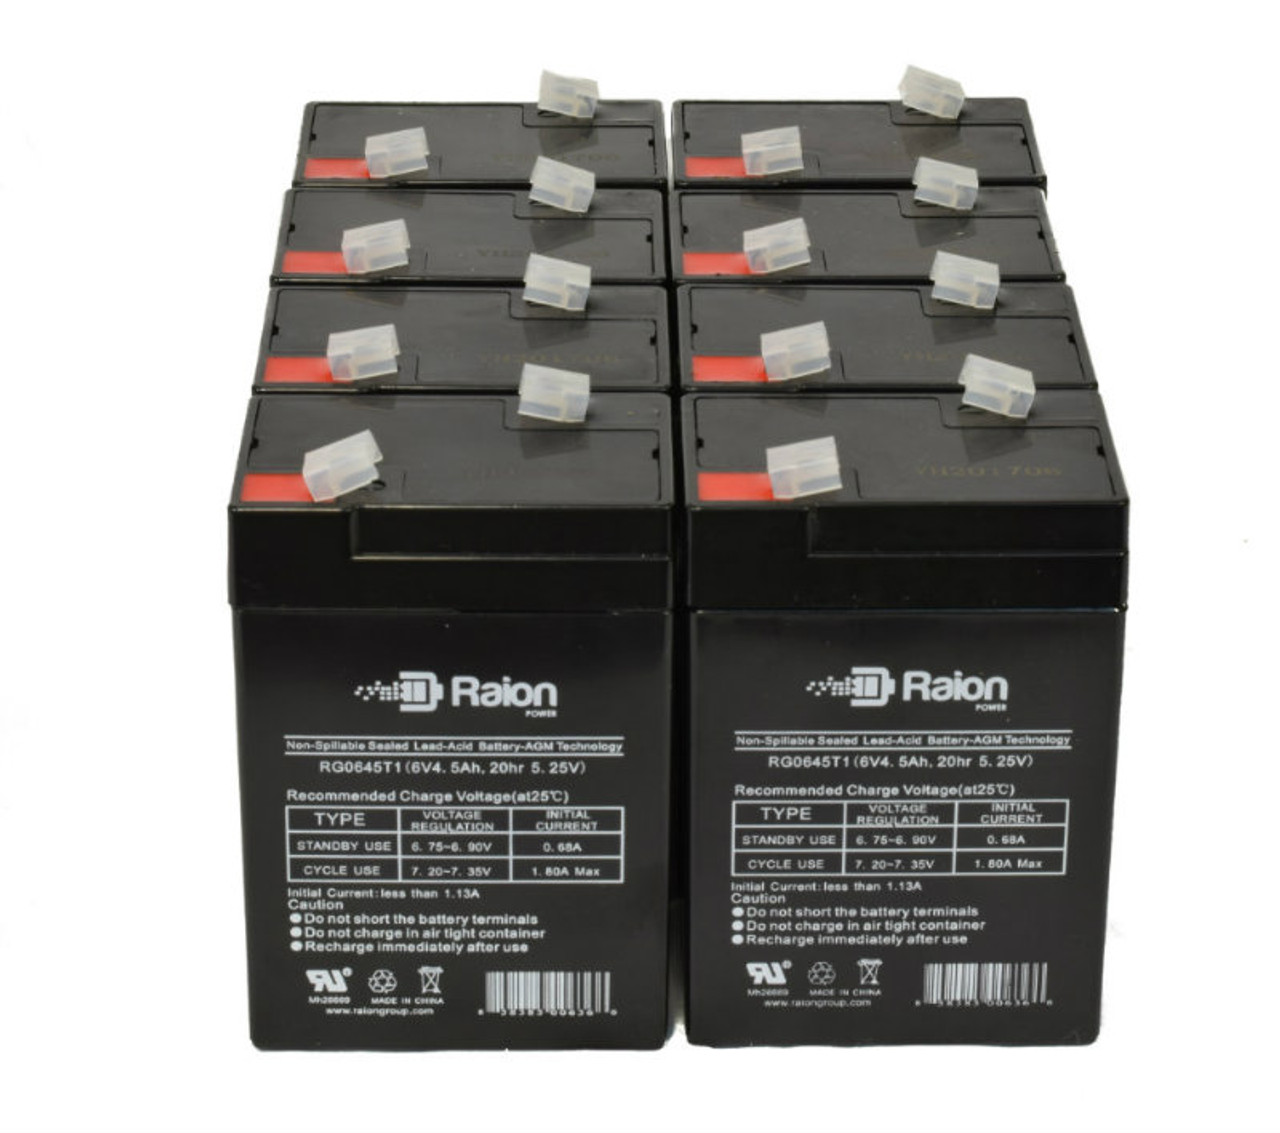 Raion Power 6V 4.5Ah Replacement Emergency Light Battery for Sure-Lites / Cooper Lighting SL-26-78 - 8 Pack